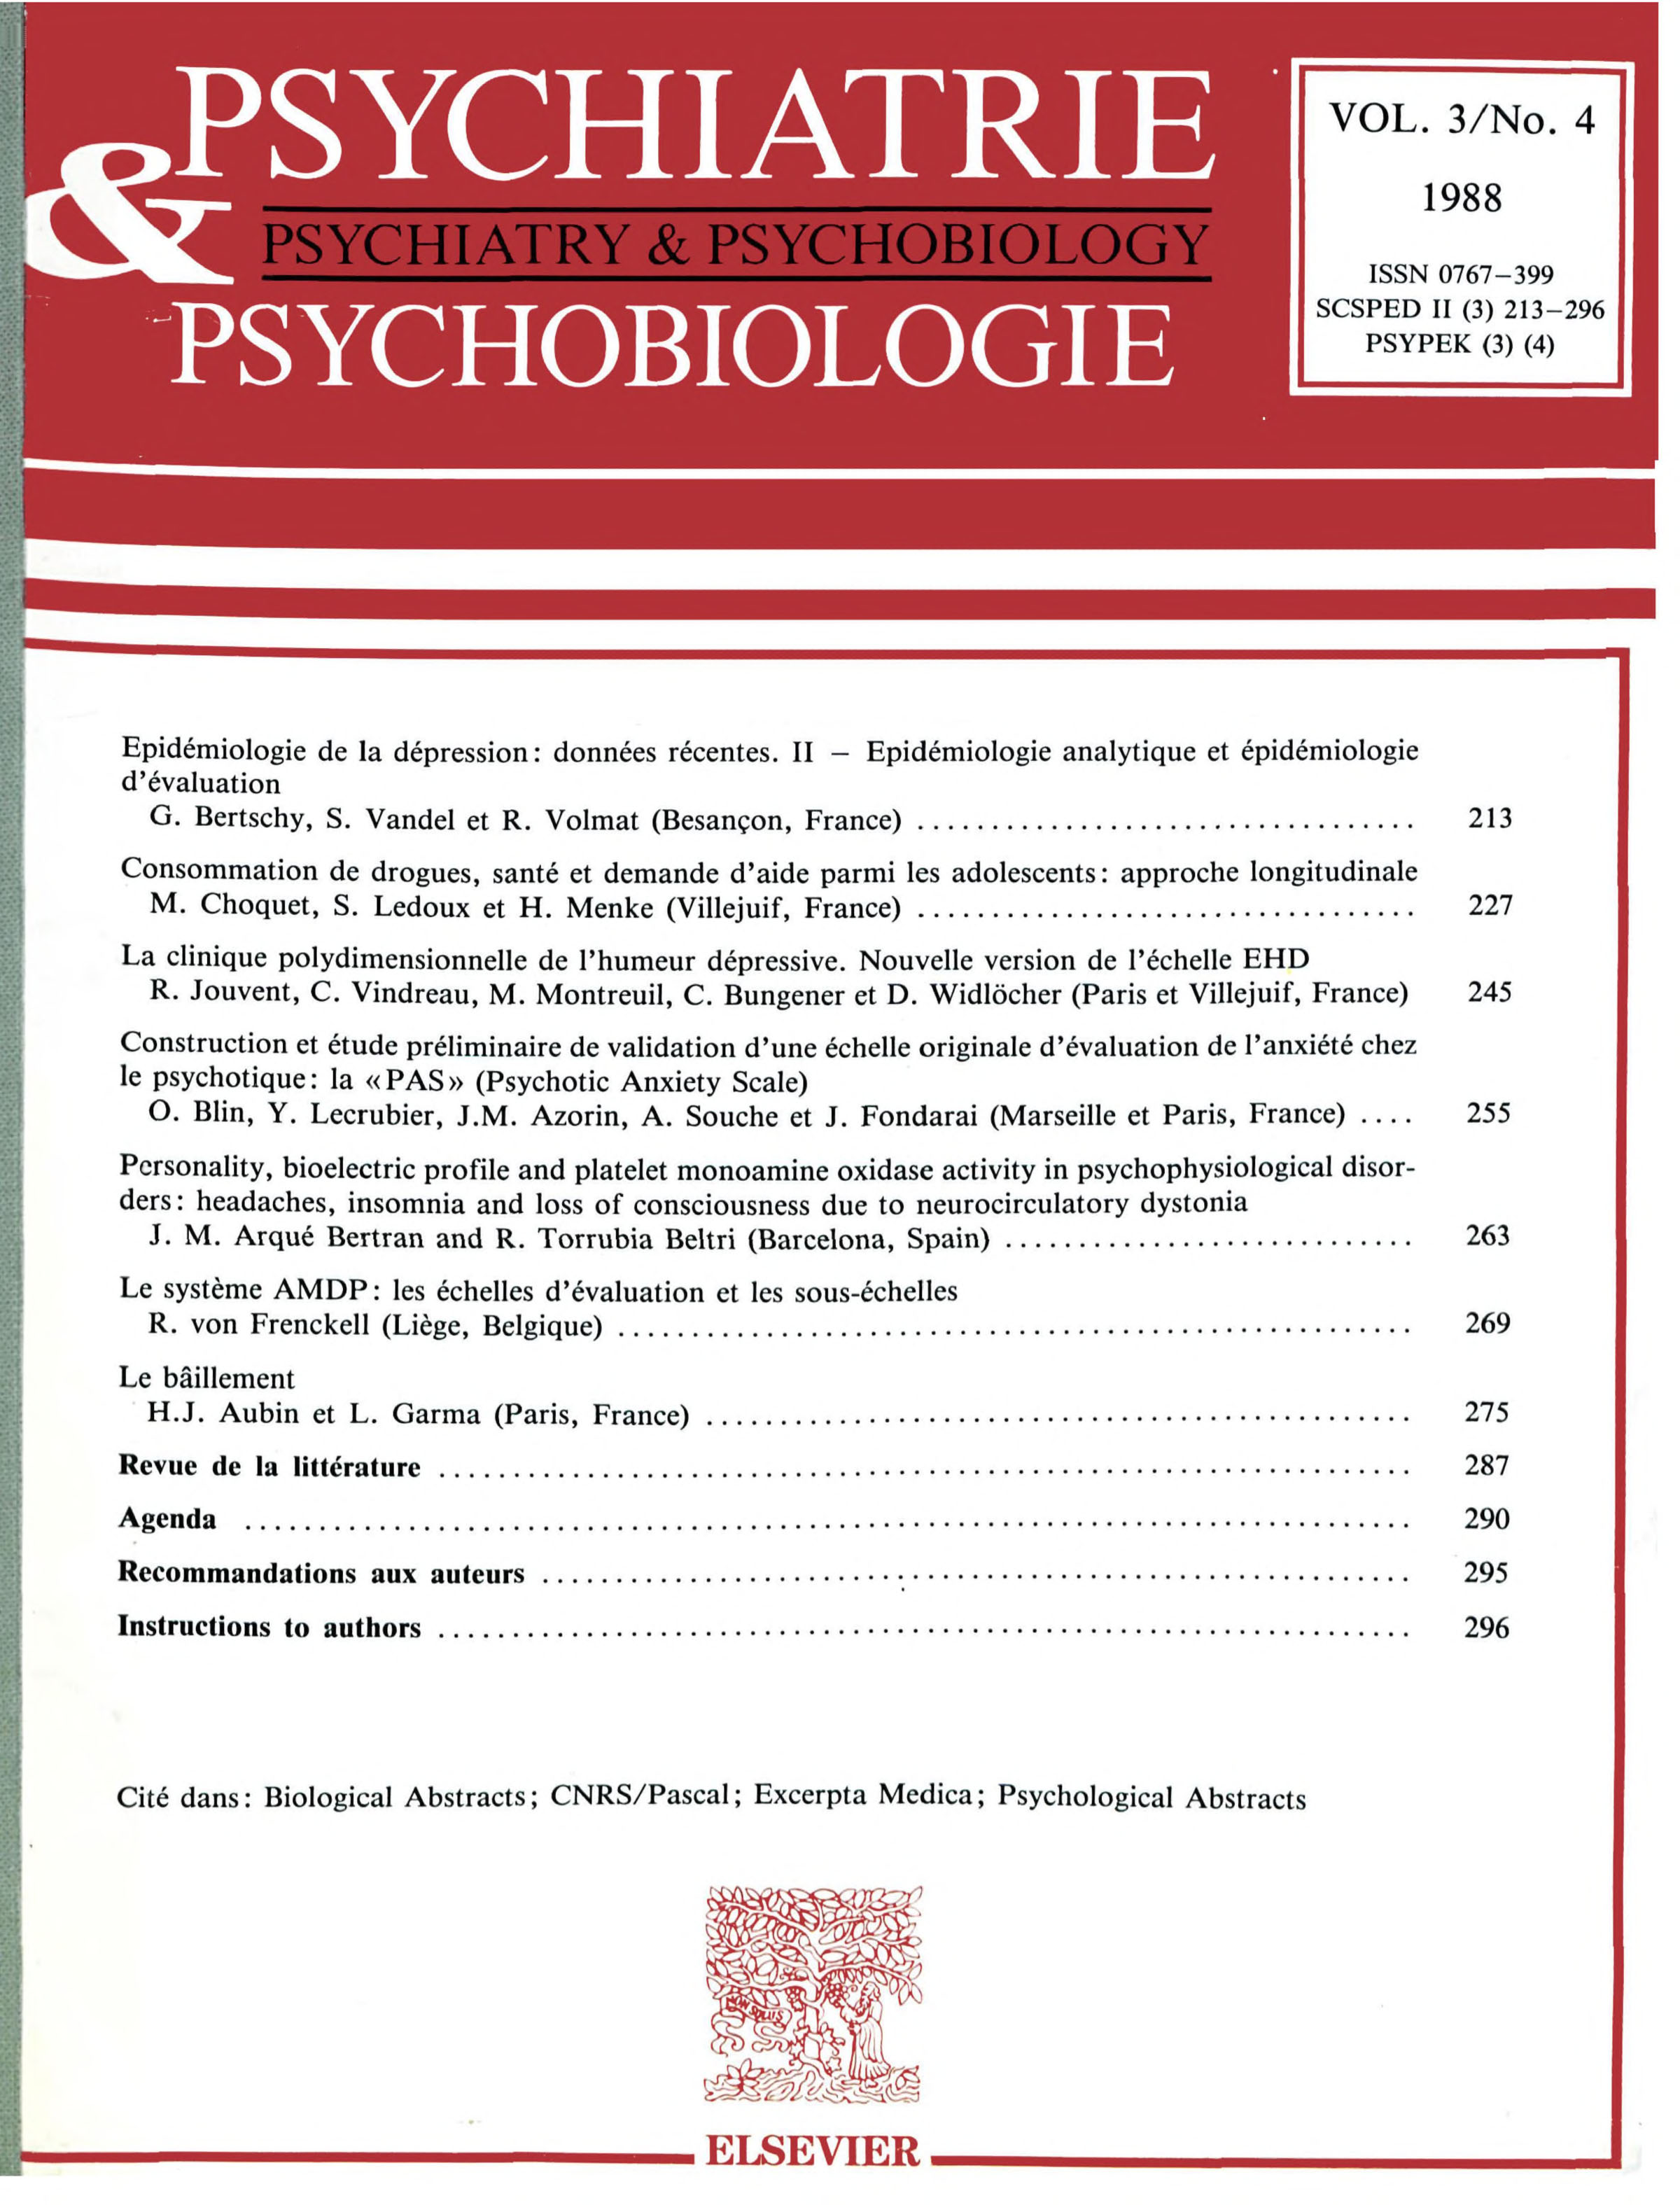 European Psychiatry Spanish edition